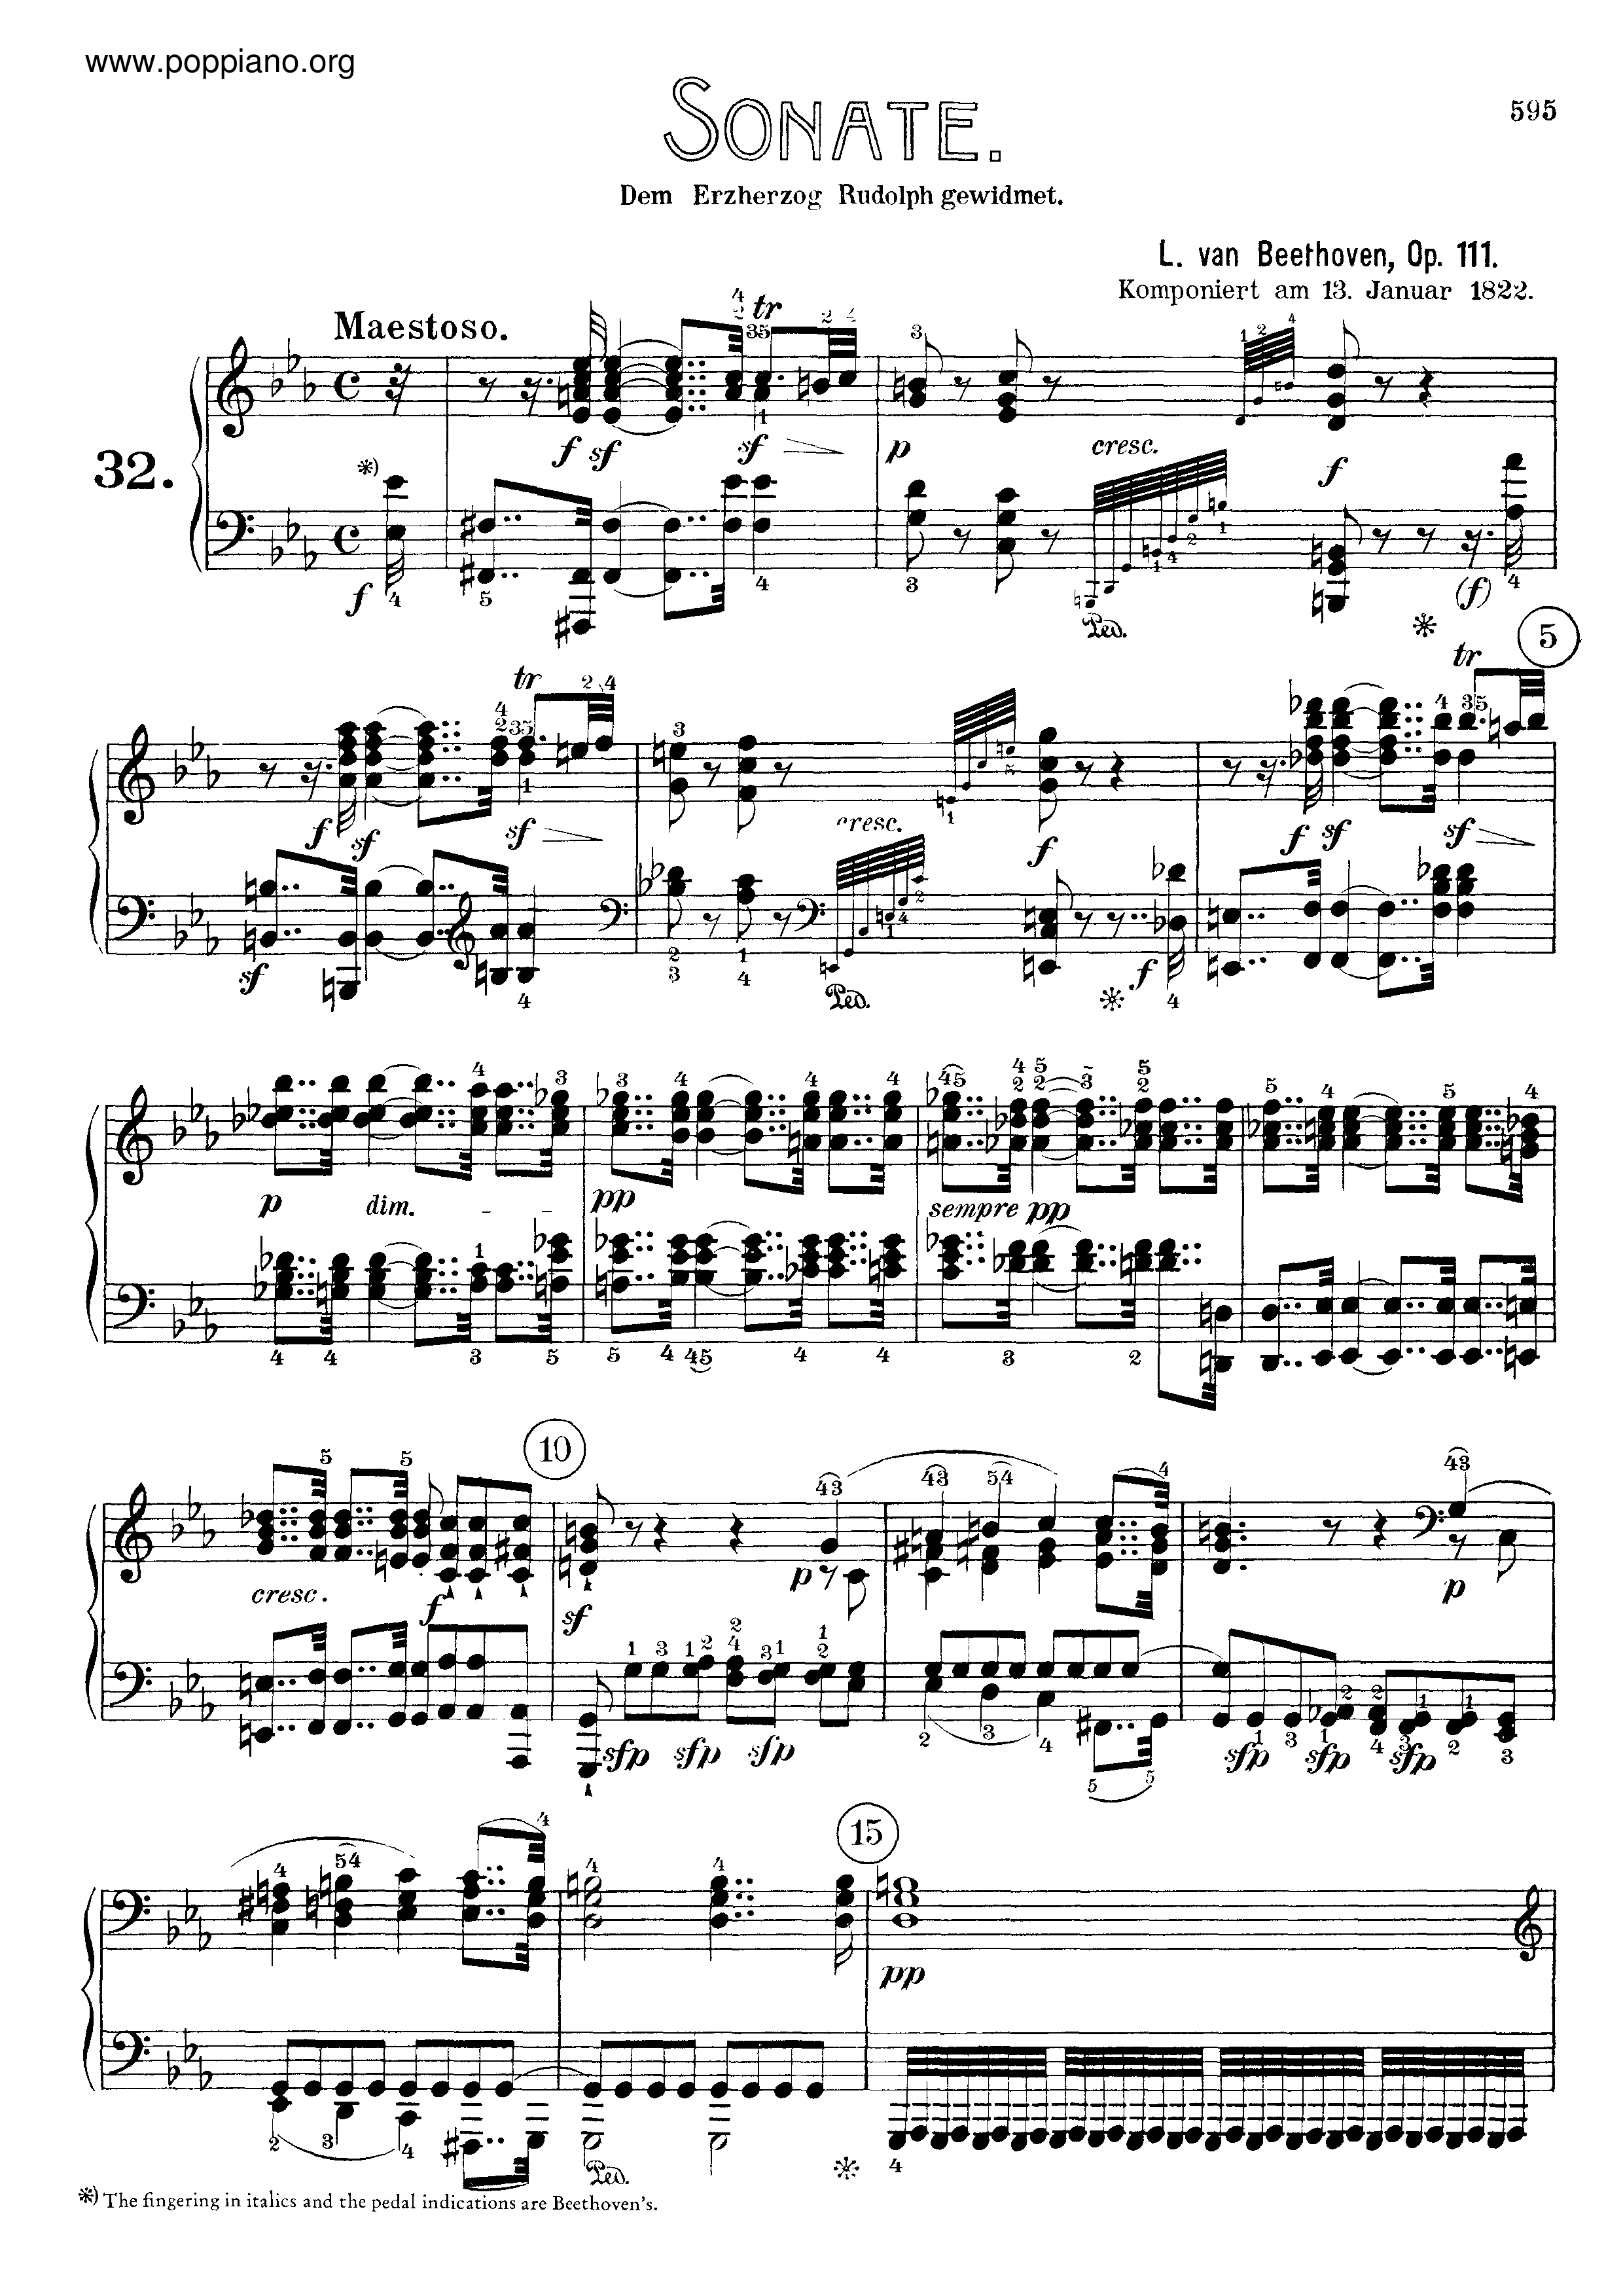 Sonata No. 32 in C minorピアノ譜